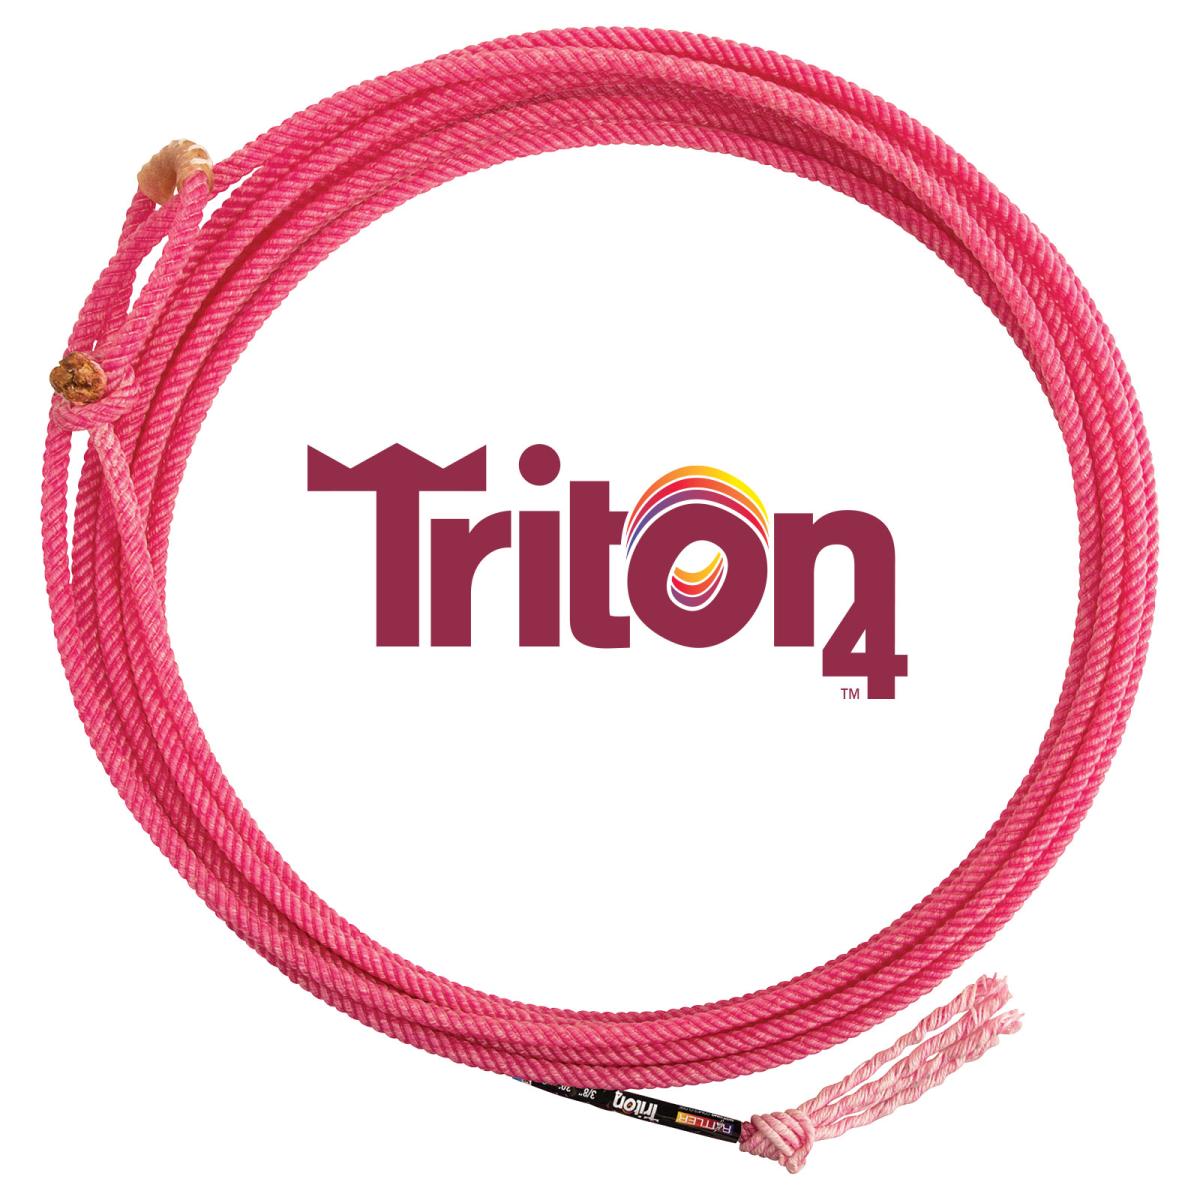 Triton Rope